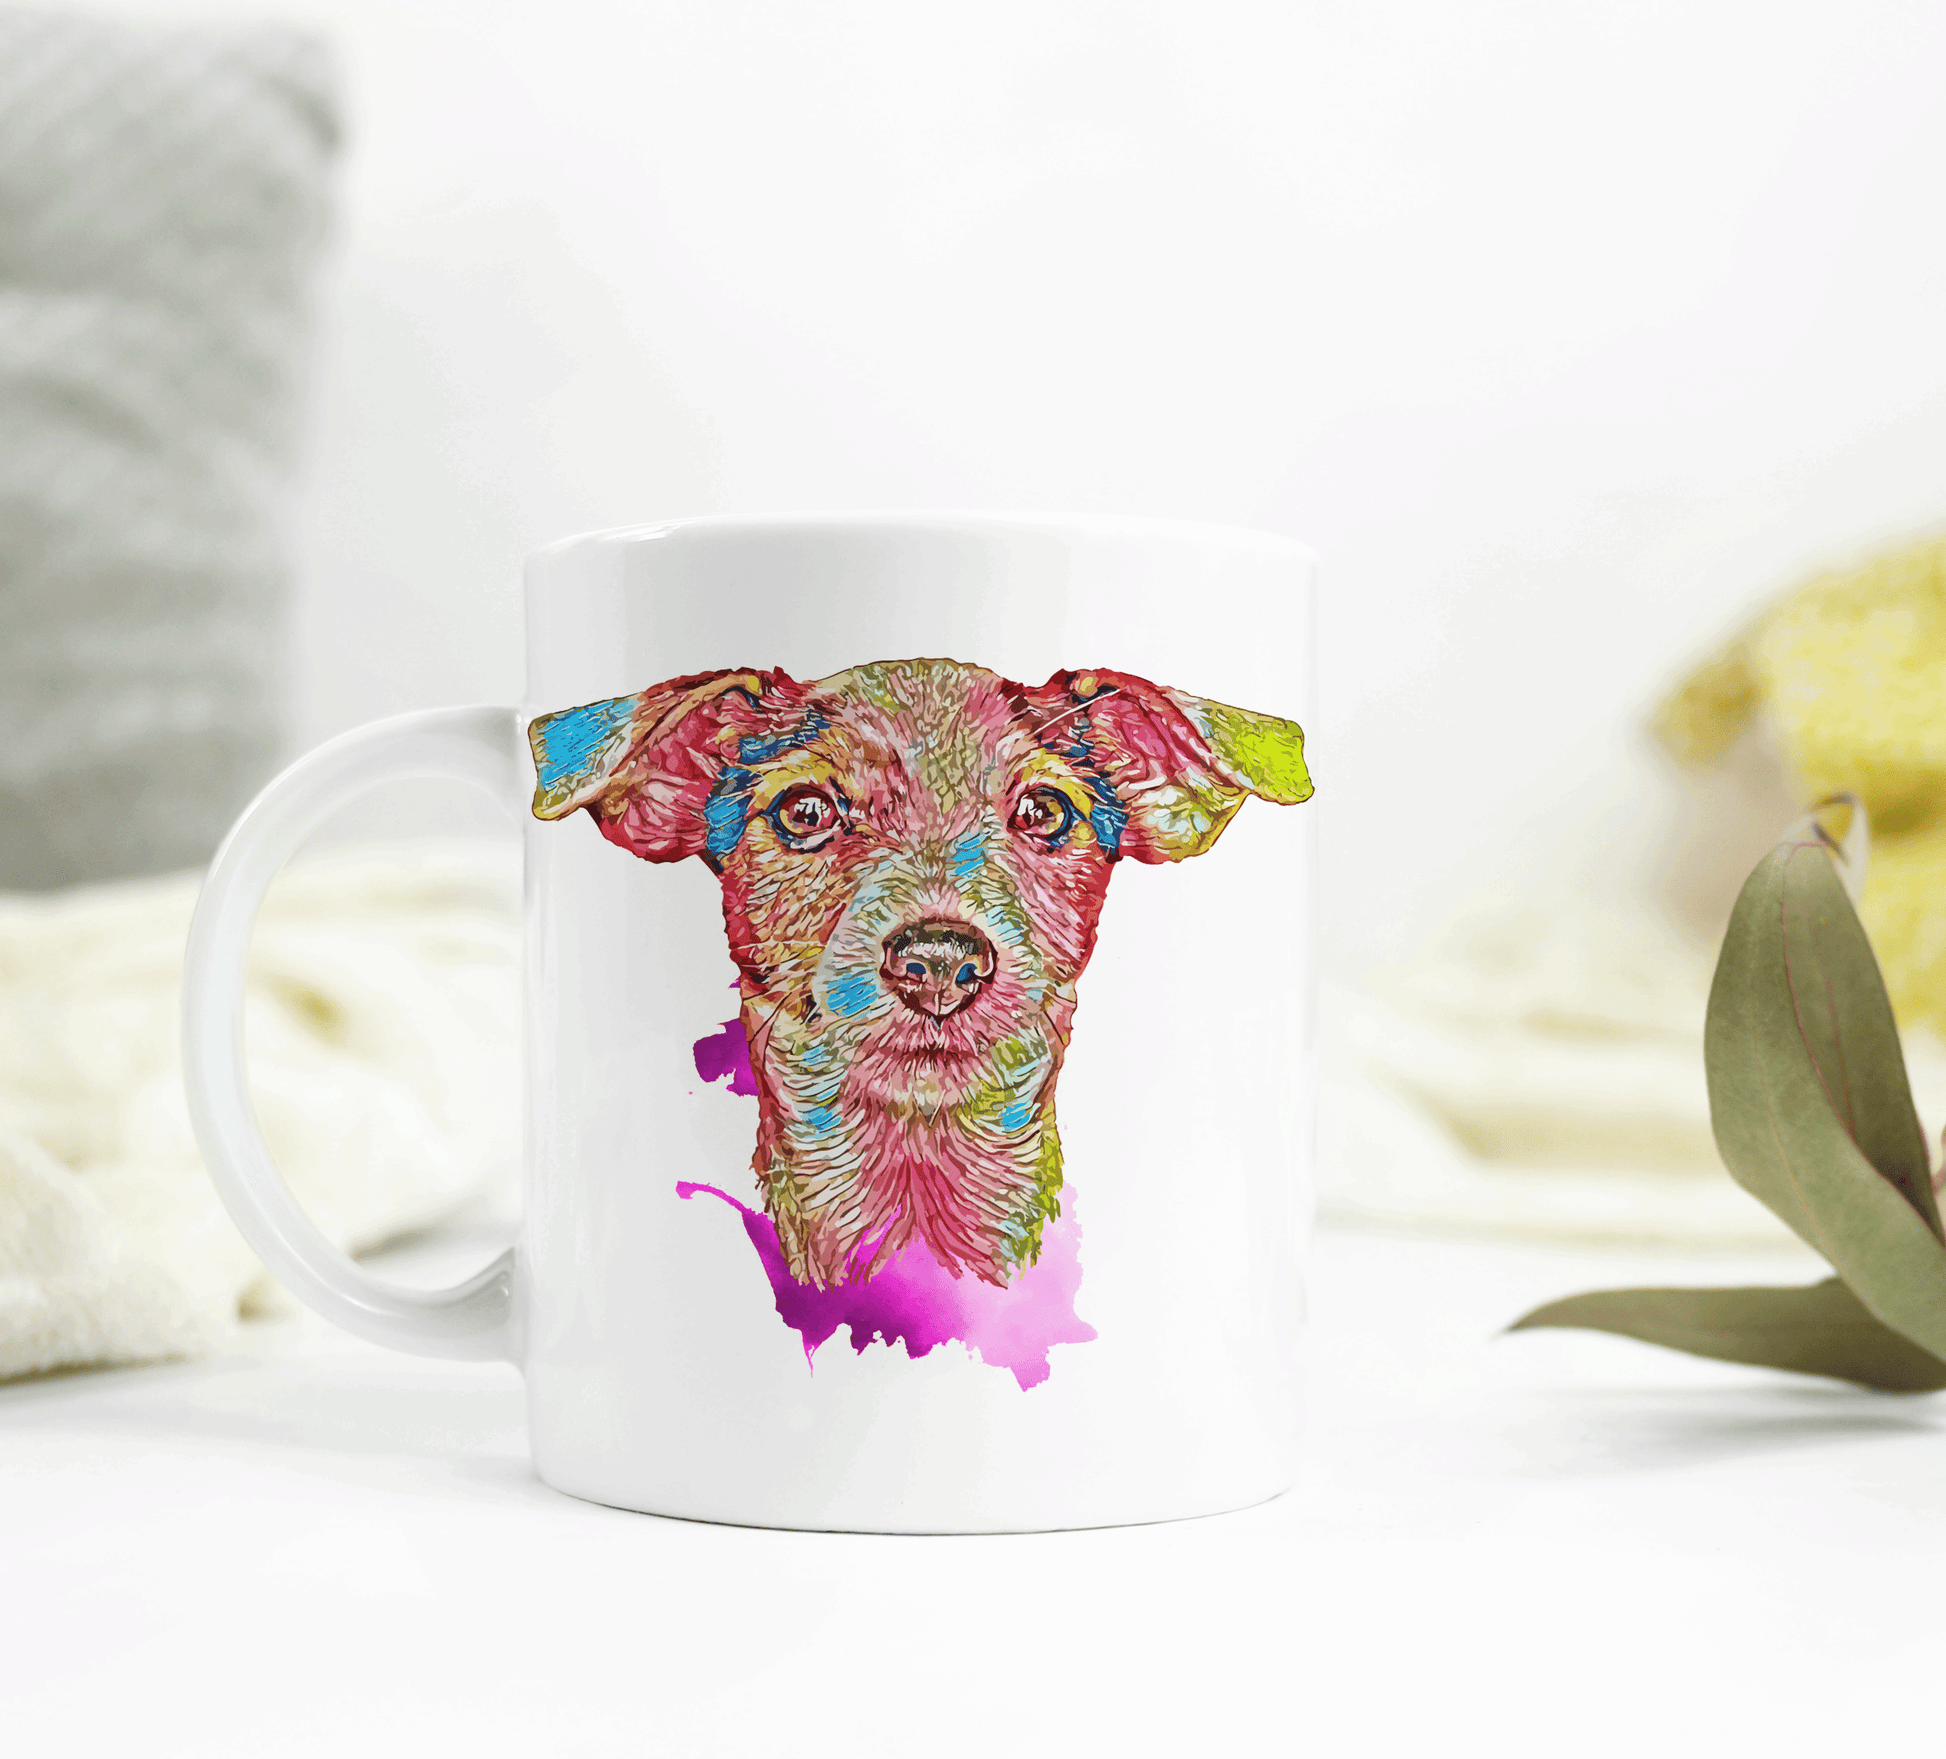  Colourful Jack Russel Dog Head Mug by Free Spirit Accessories sold by Free Spirit Accessories